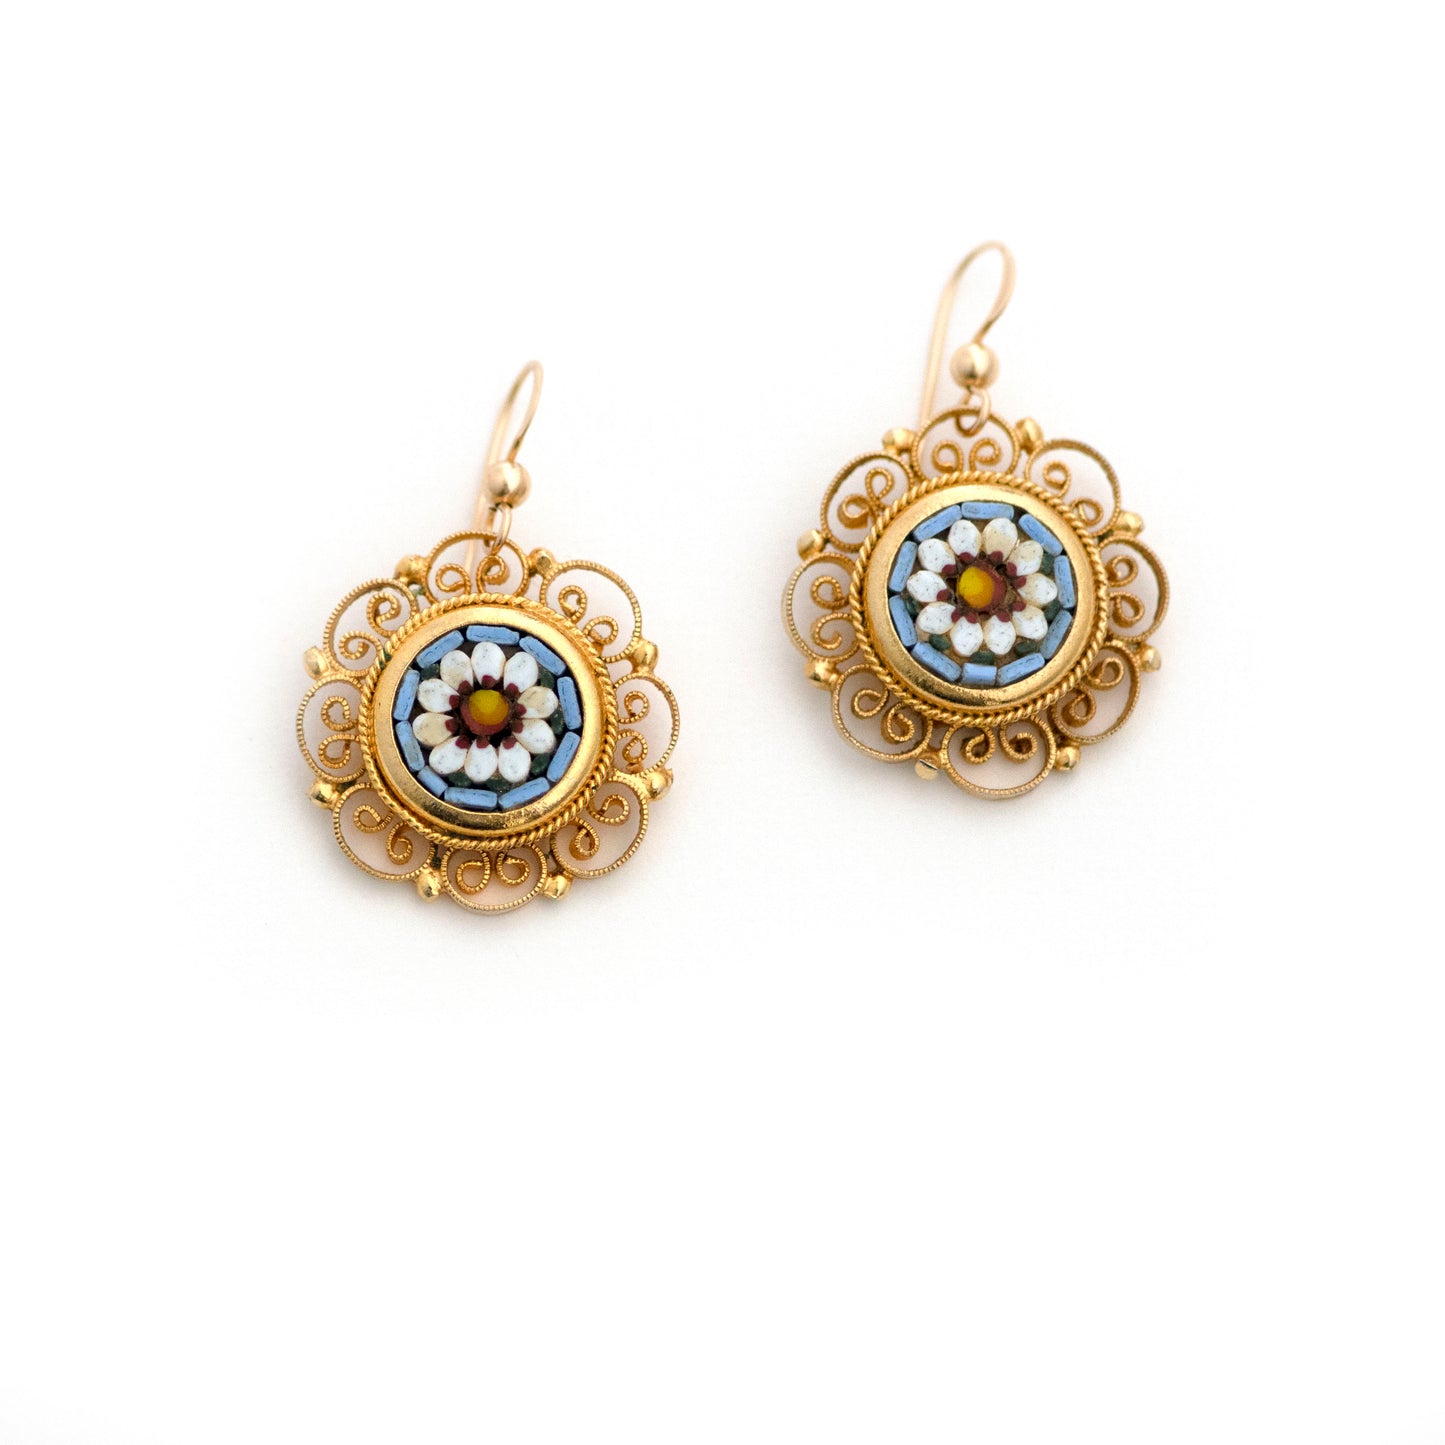 A pair of beautiful gold-tone vintage Italian micro mosaic earrings.